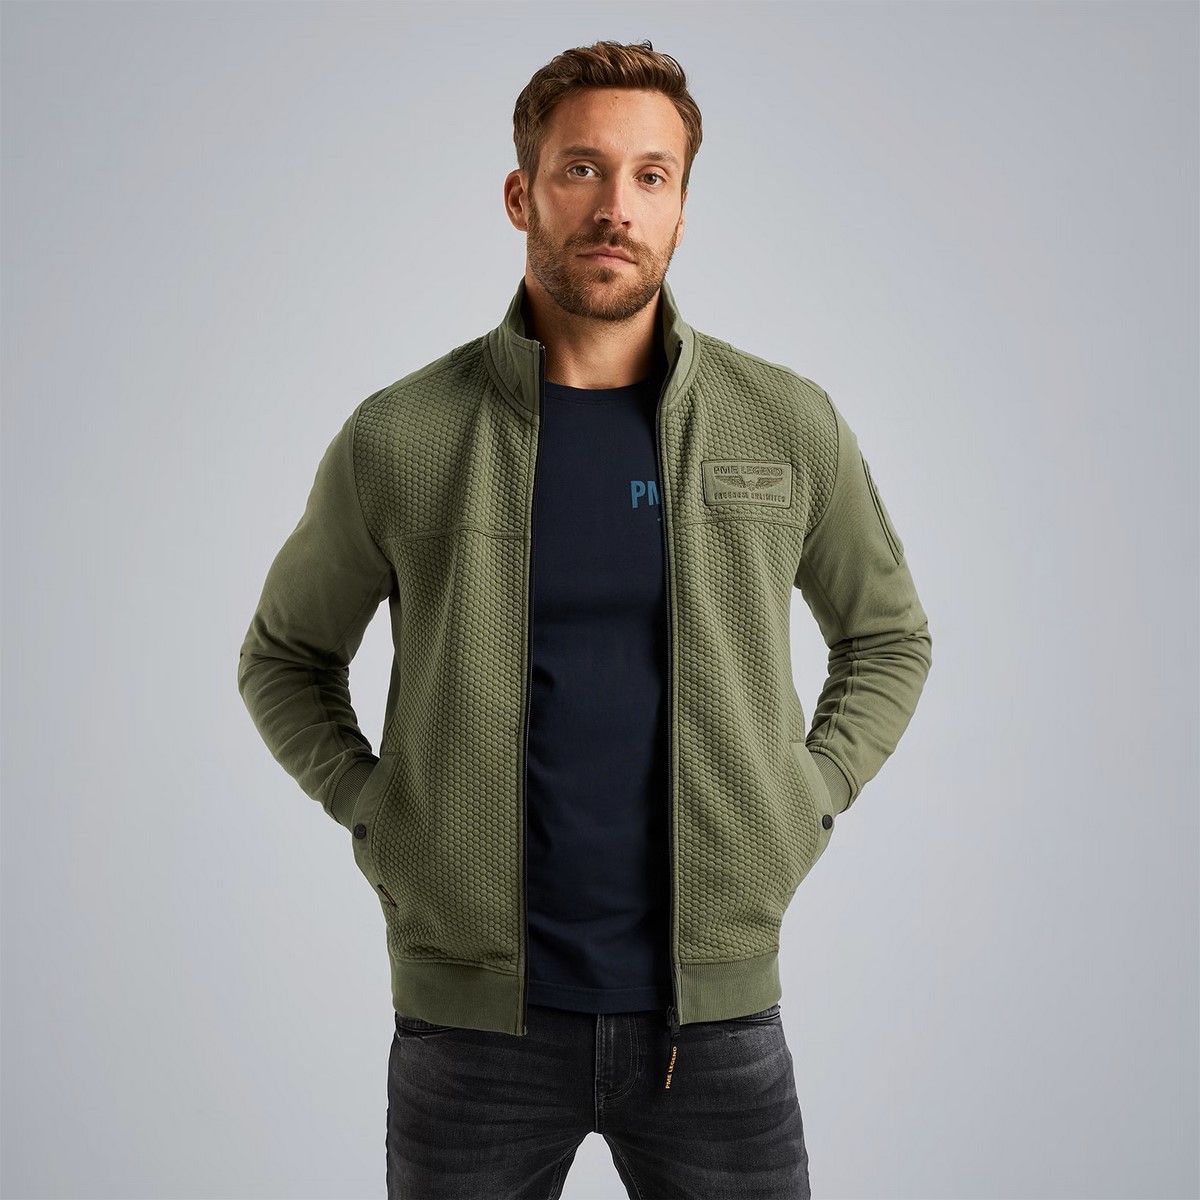 Pme Legend Zip jacket jacquard interlock swea Deep Lichen Green 00105323-6149